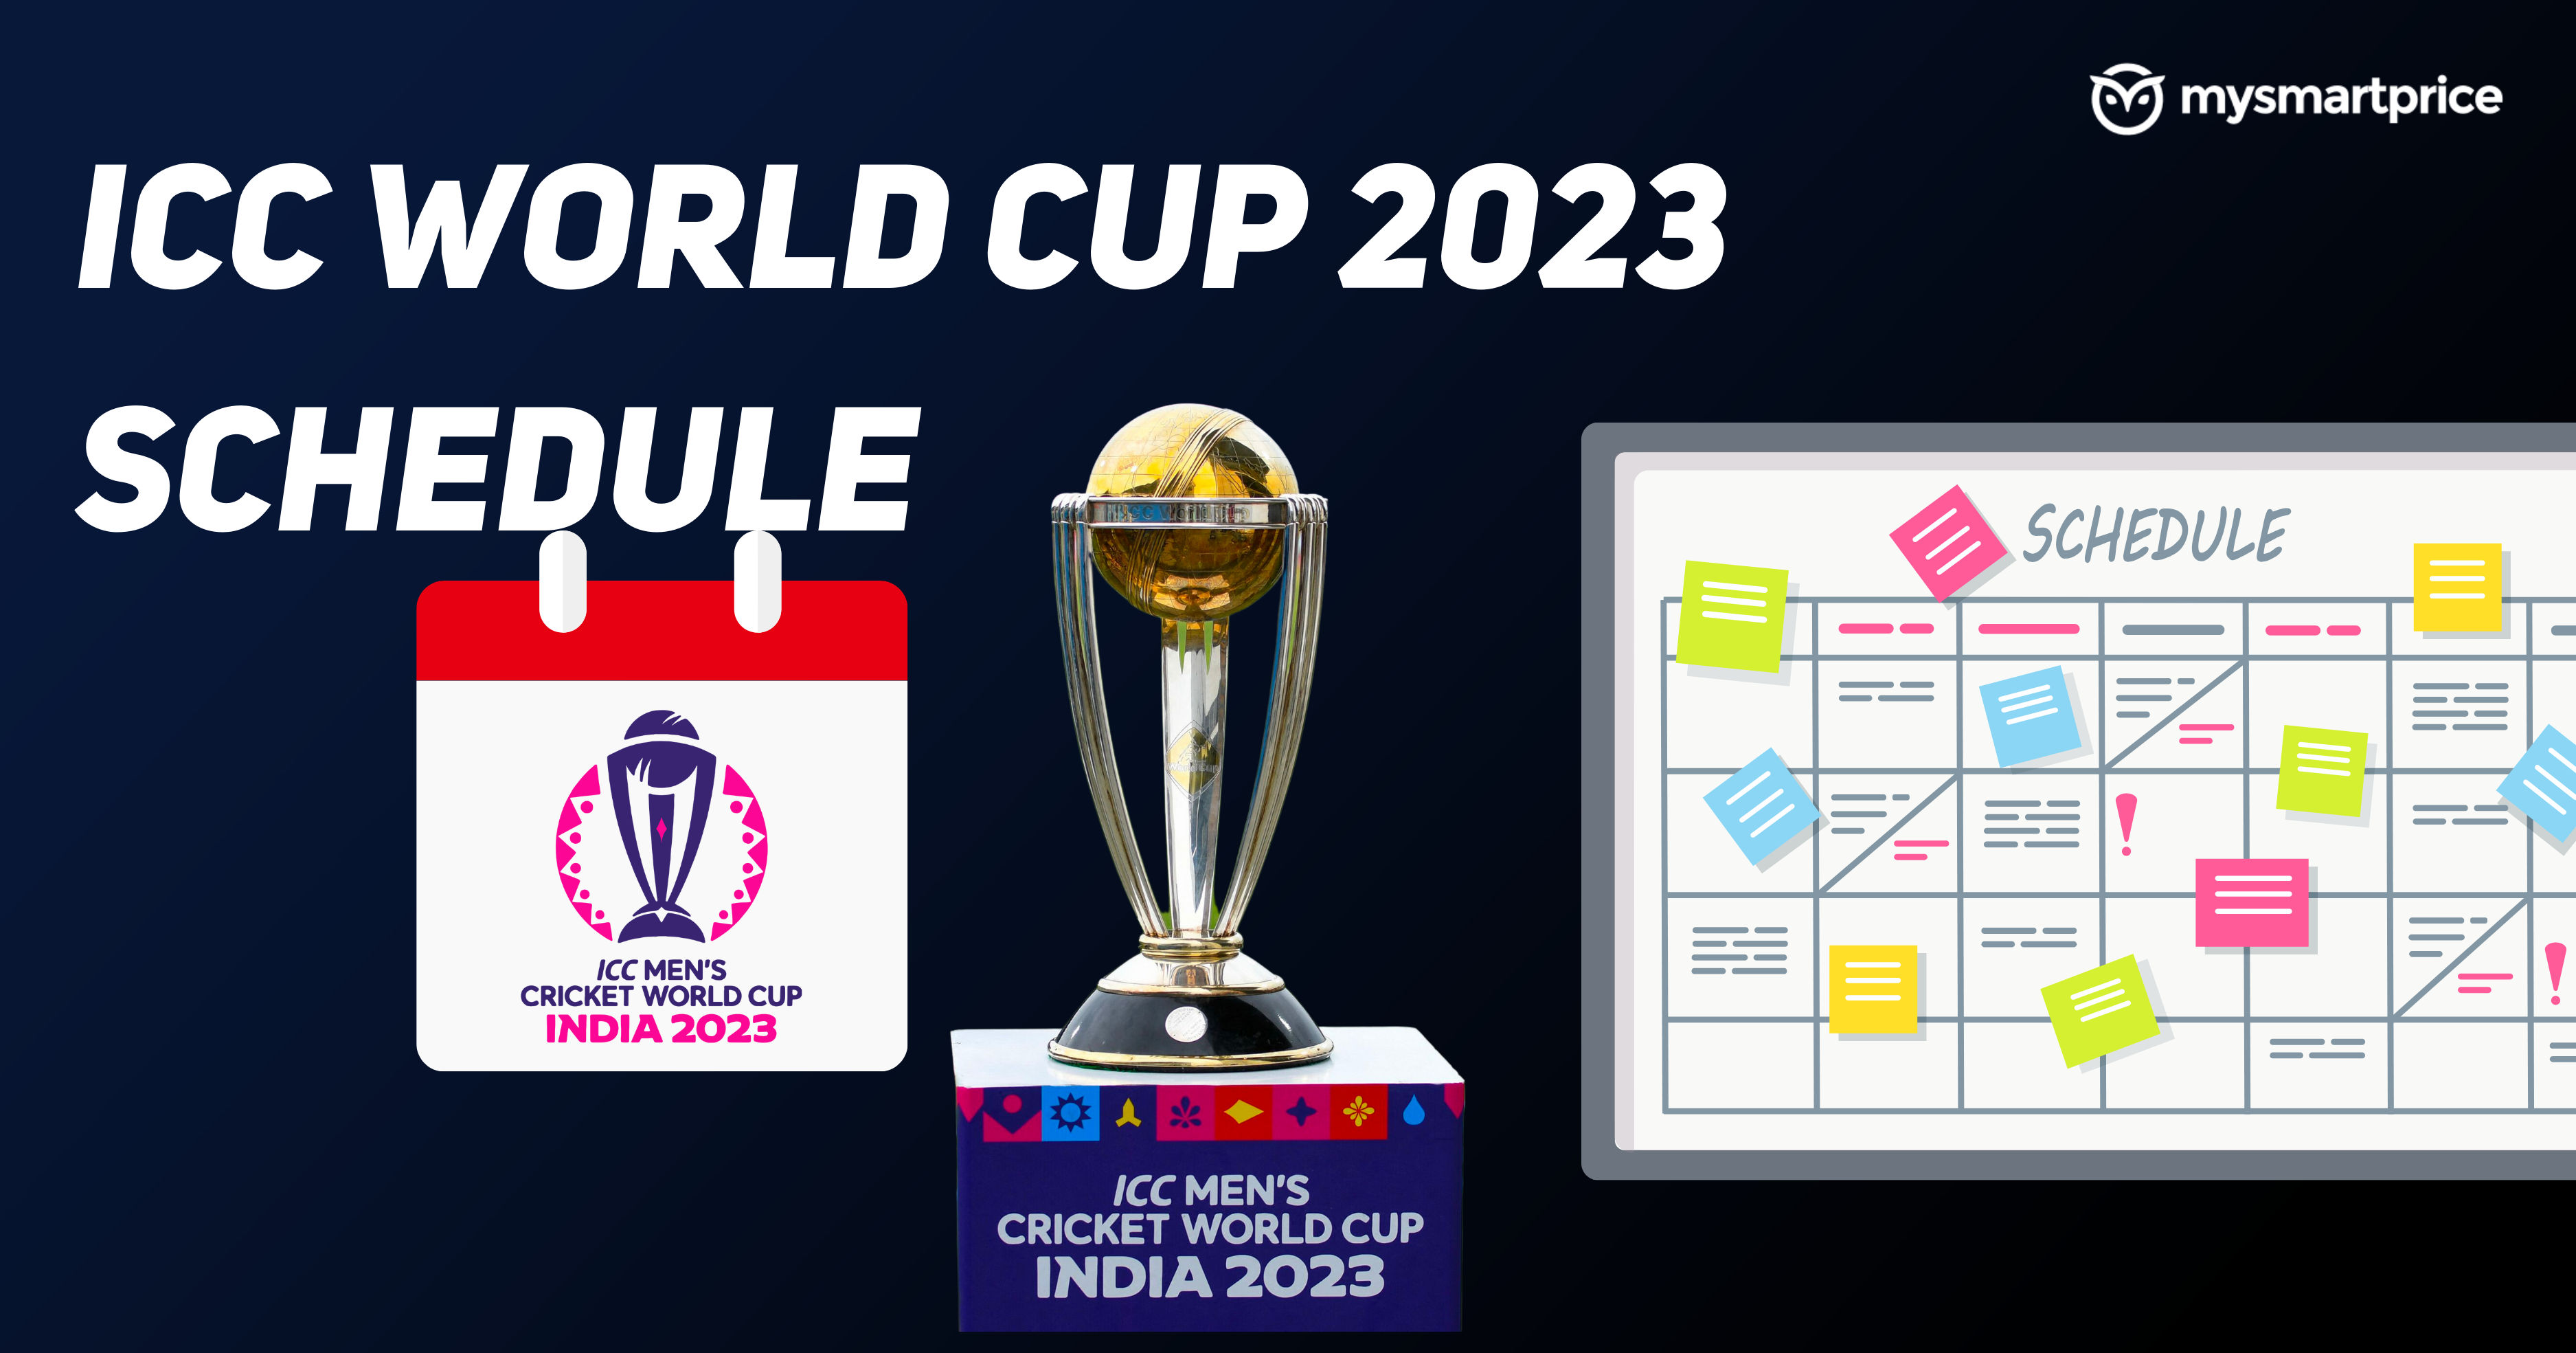 ICC Men's World Cup 2023 Schedule Full List of Matches, Start Date